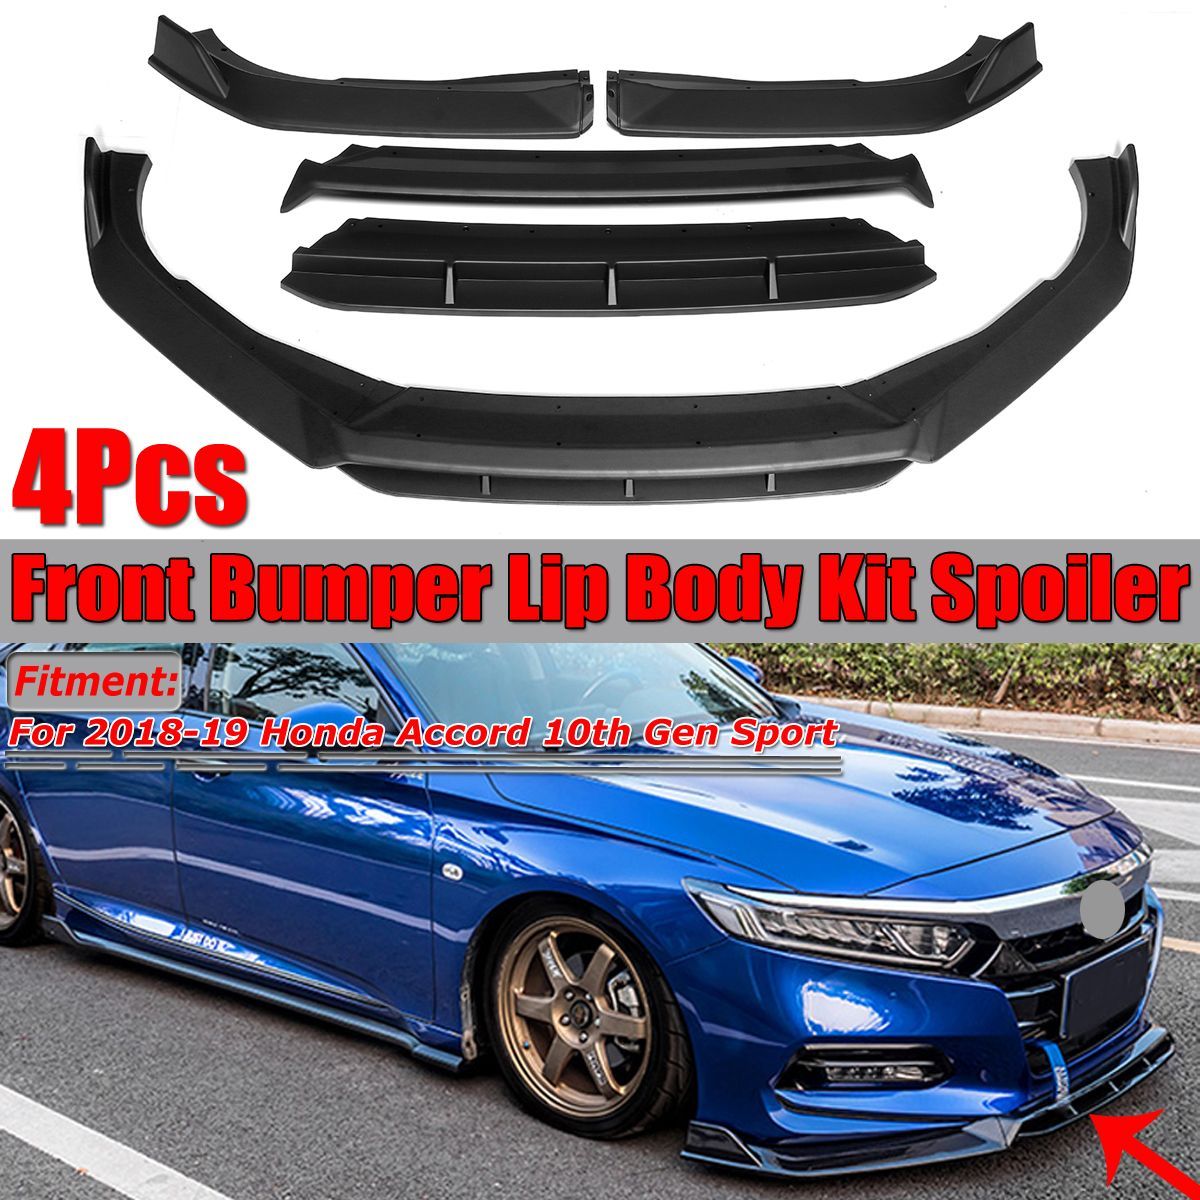 4Pcs-Front-Bumper-Lip-Body-Kit-Spoiler-For-Honda-Accord-10th-Gen-Sport-2018-2019-1720622